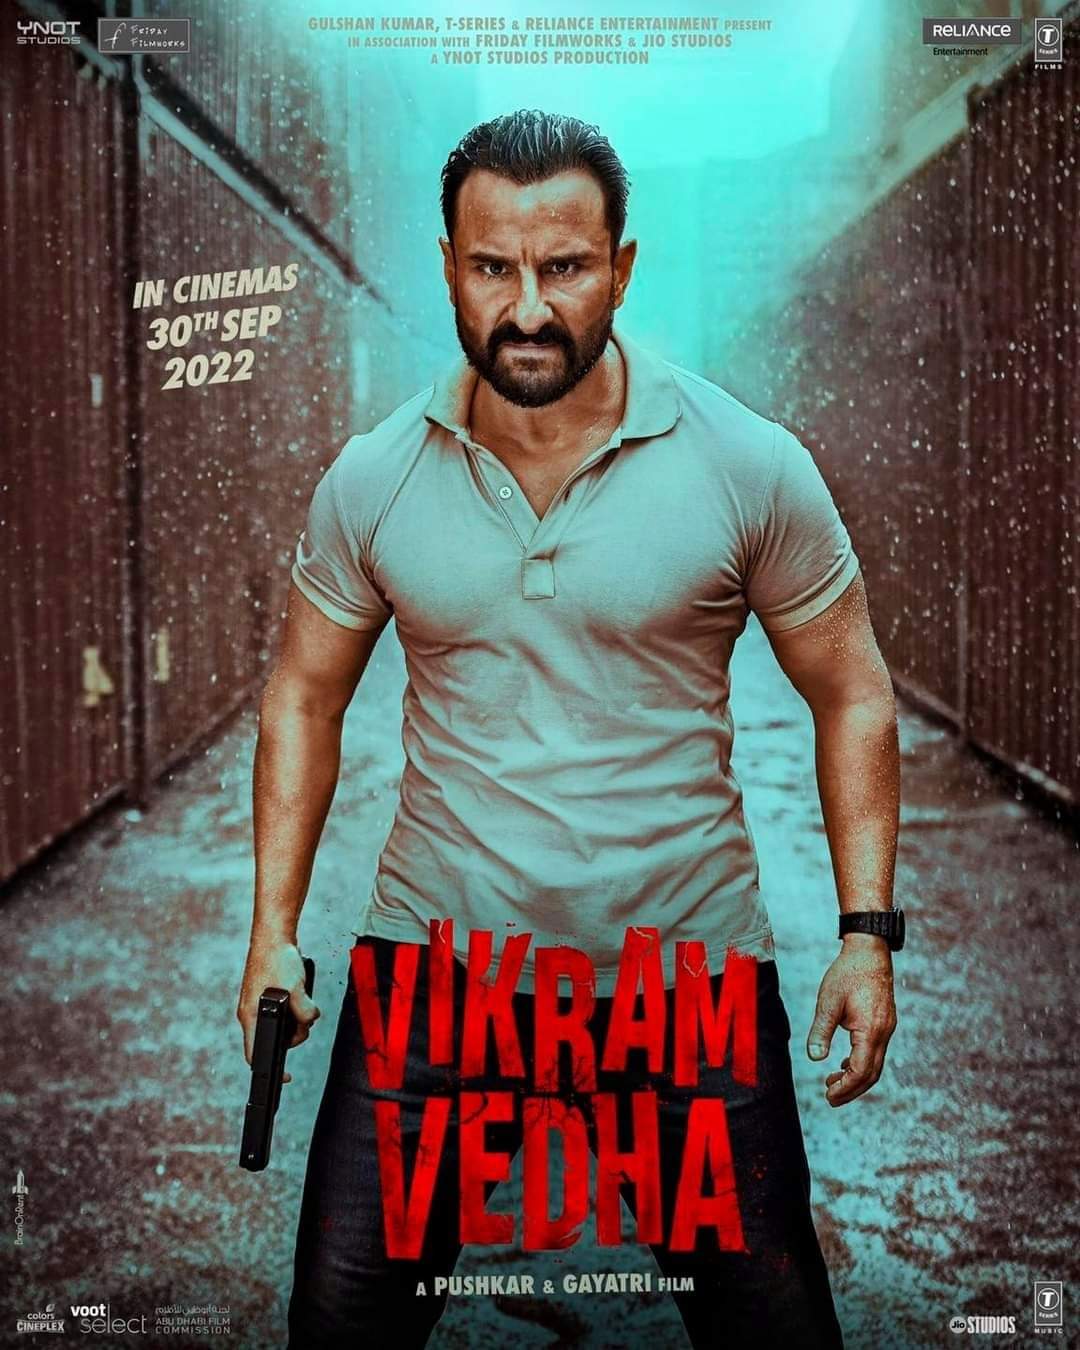 Vikram Vedha Movie OTT Rights Bagged by Voot